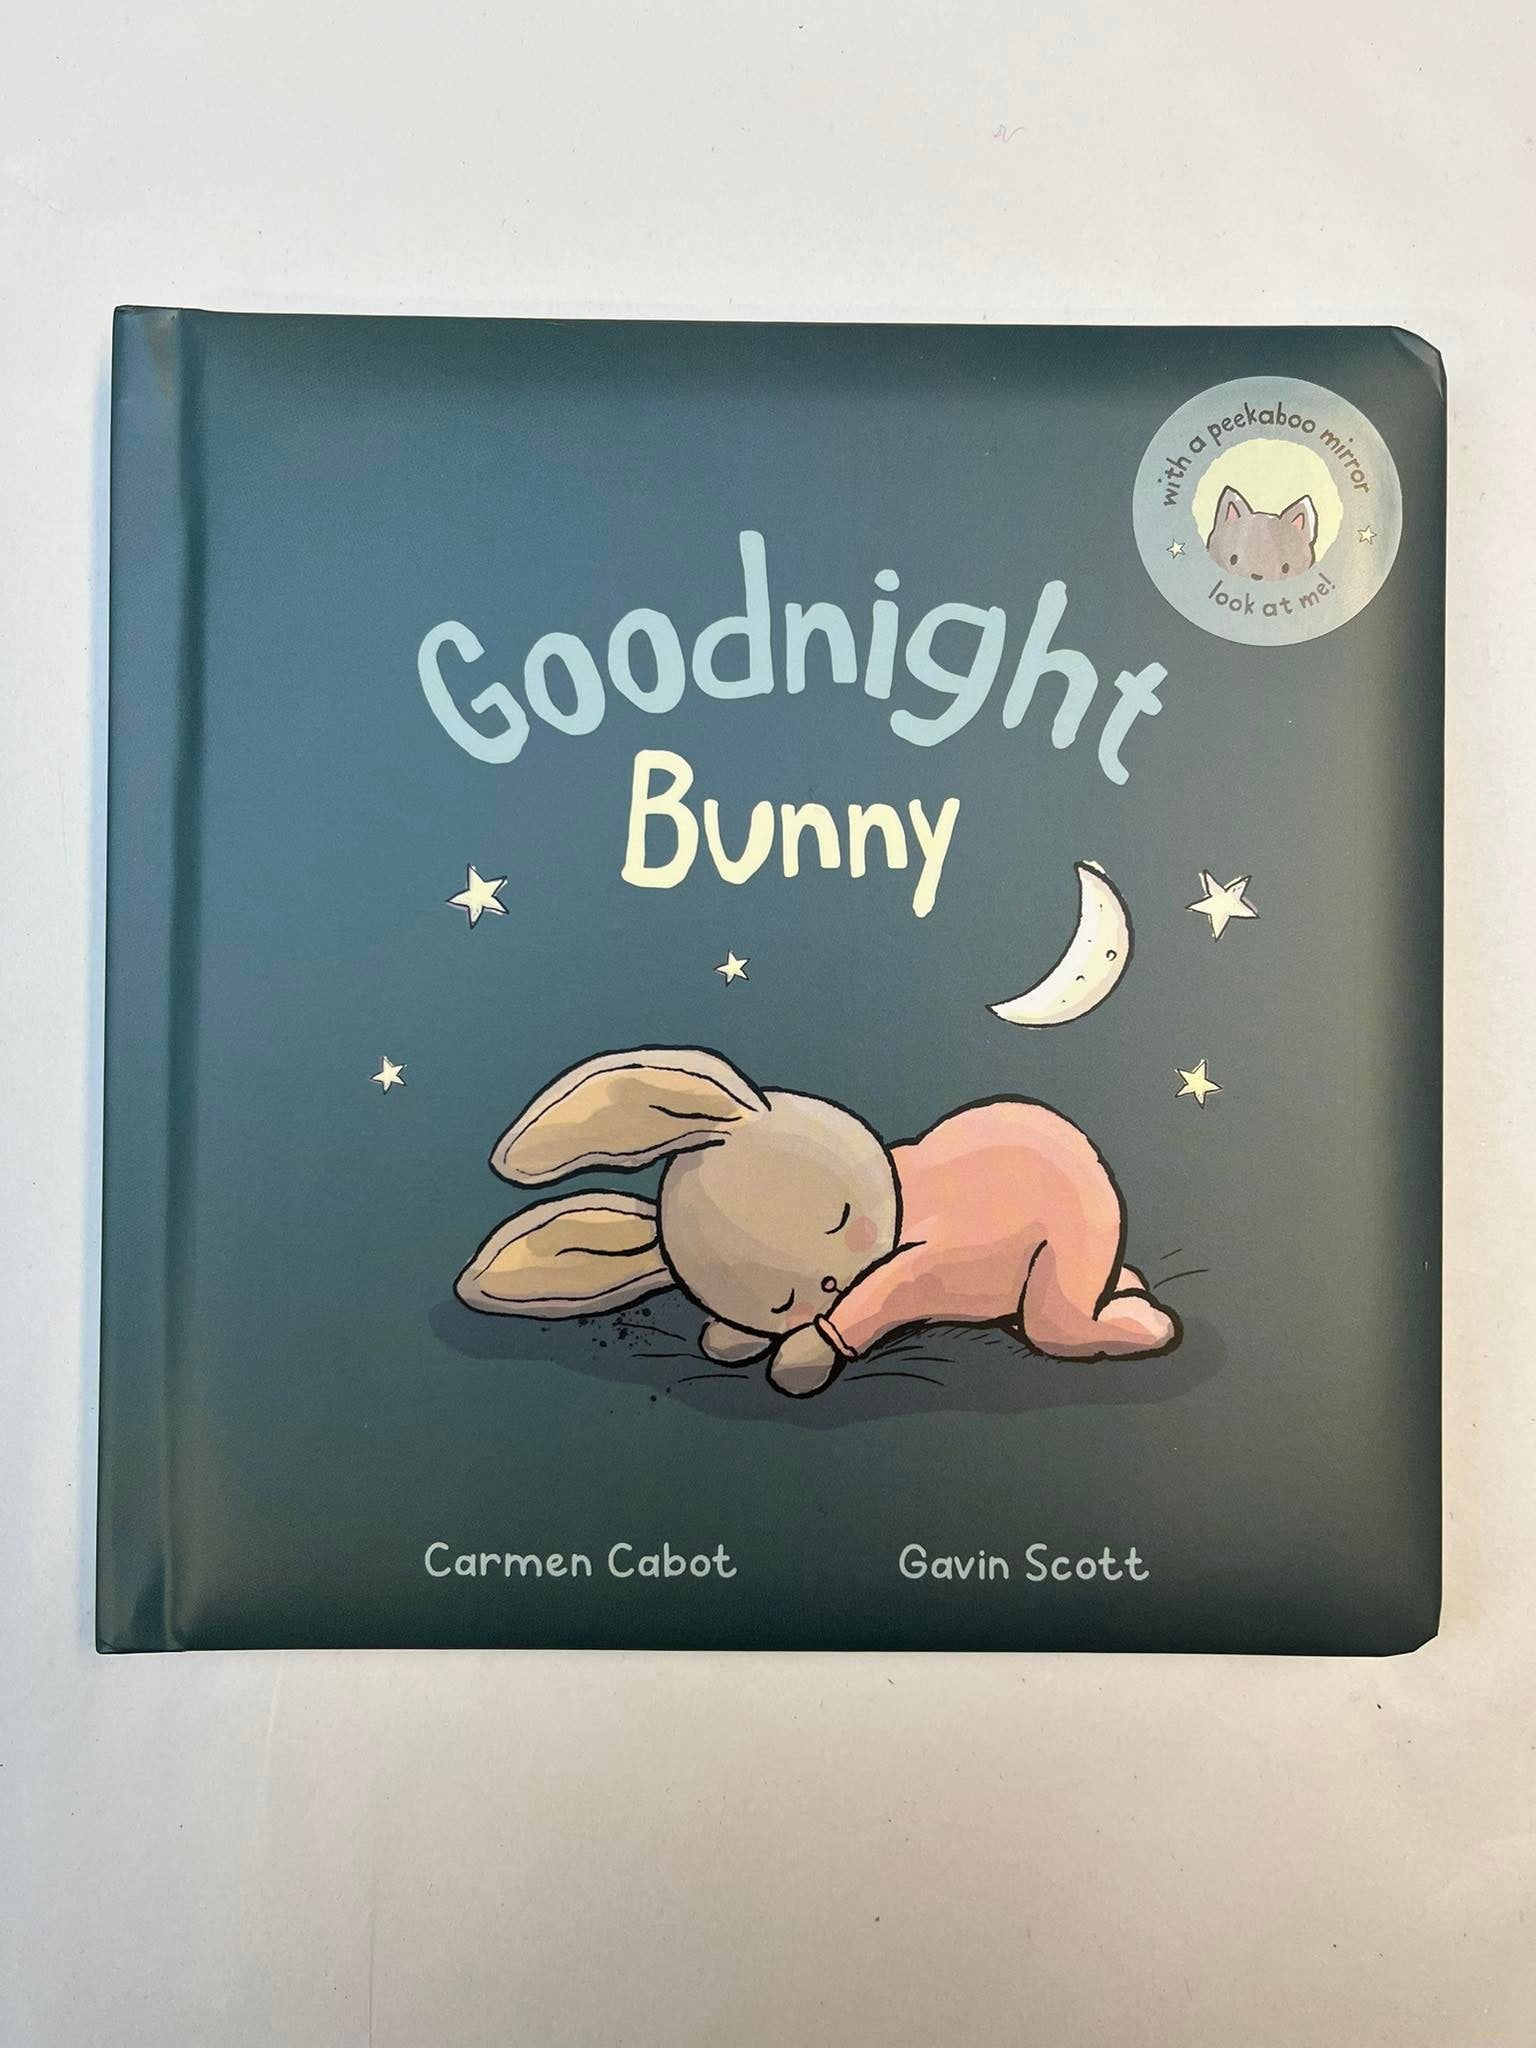 Goodnight bunny book